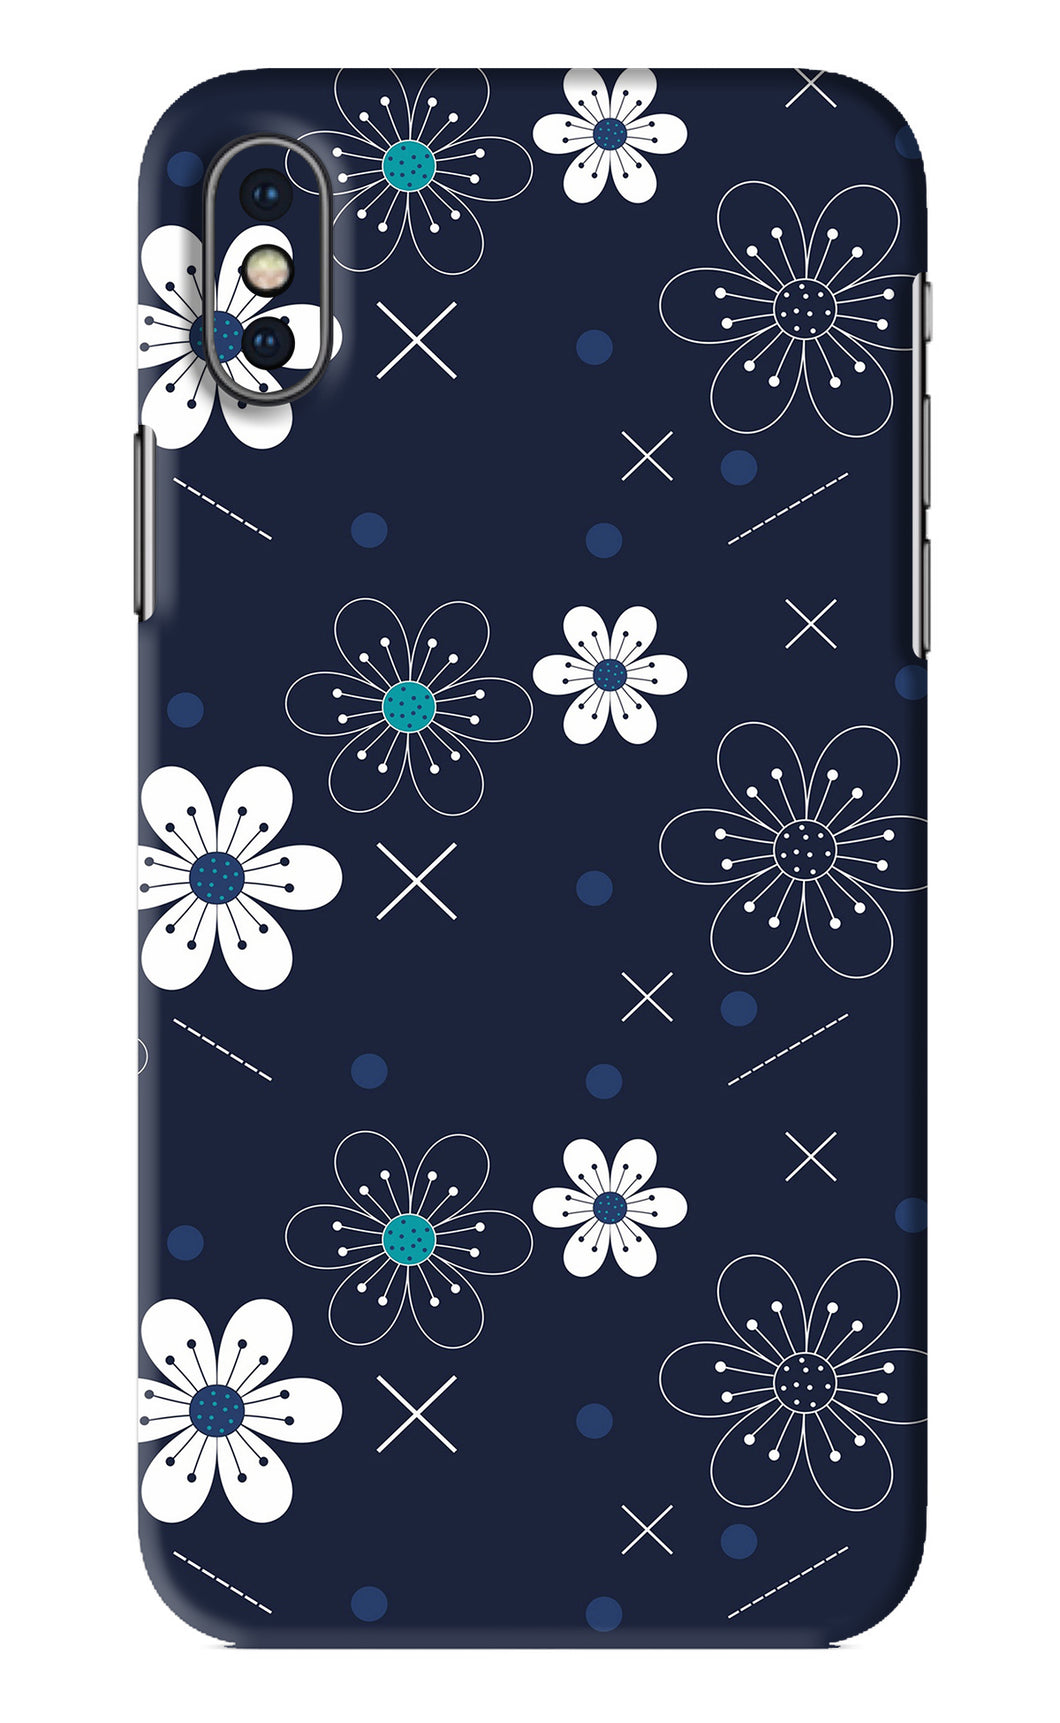 Flowers 4 iPhone XS Back Skin Wrap